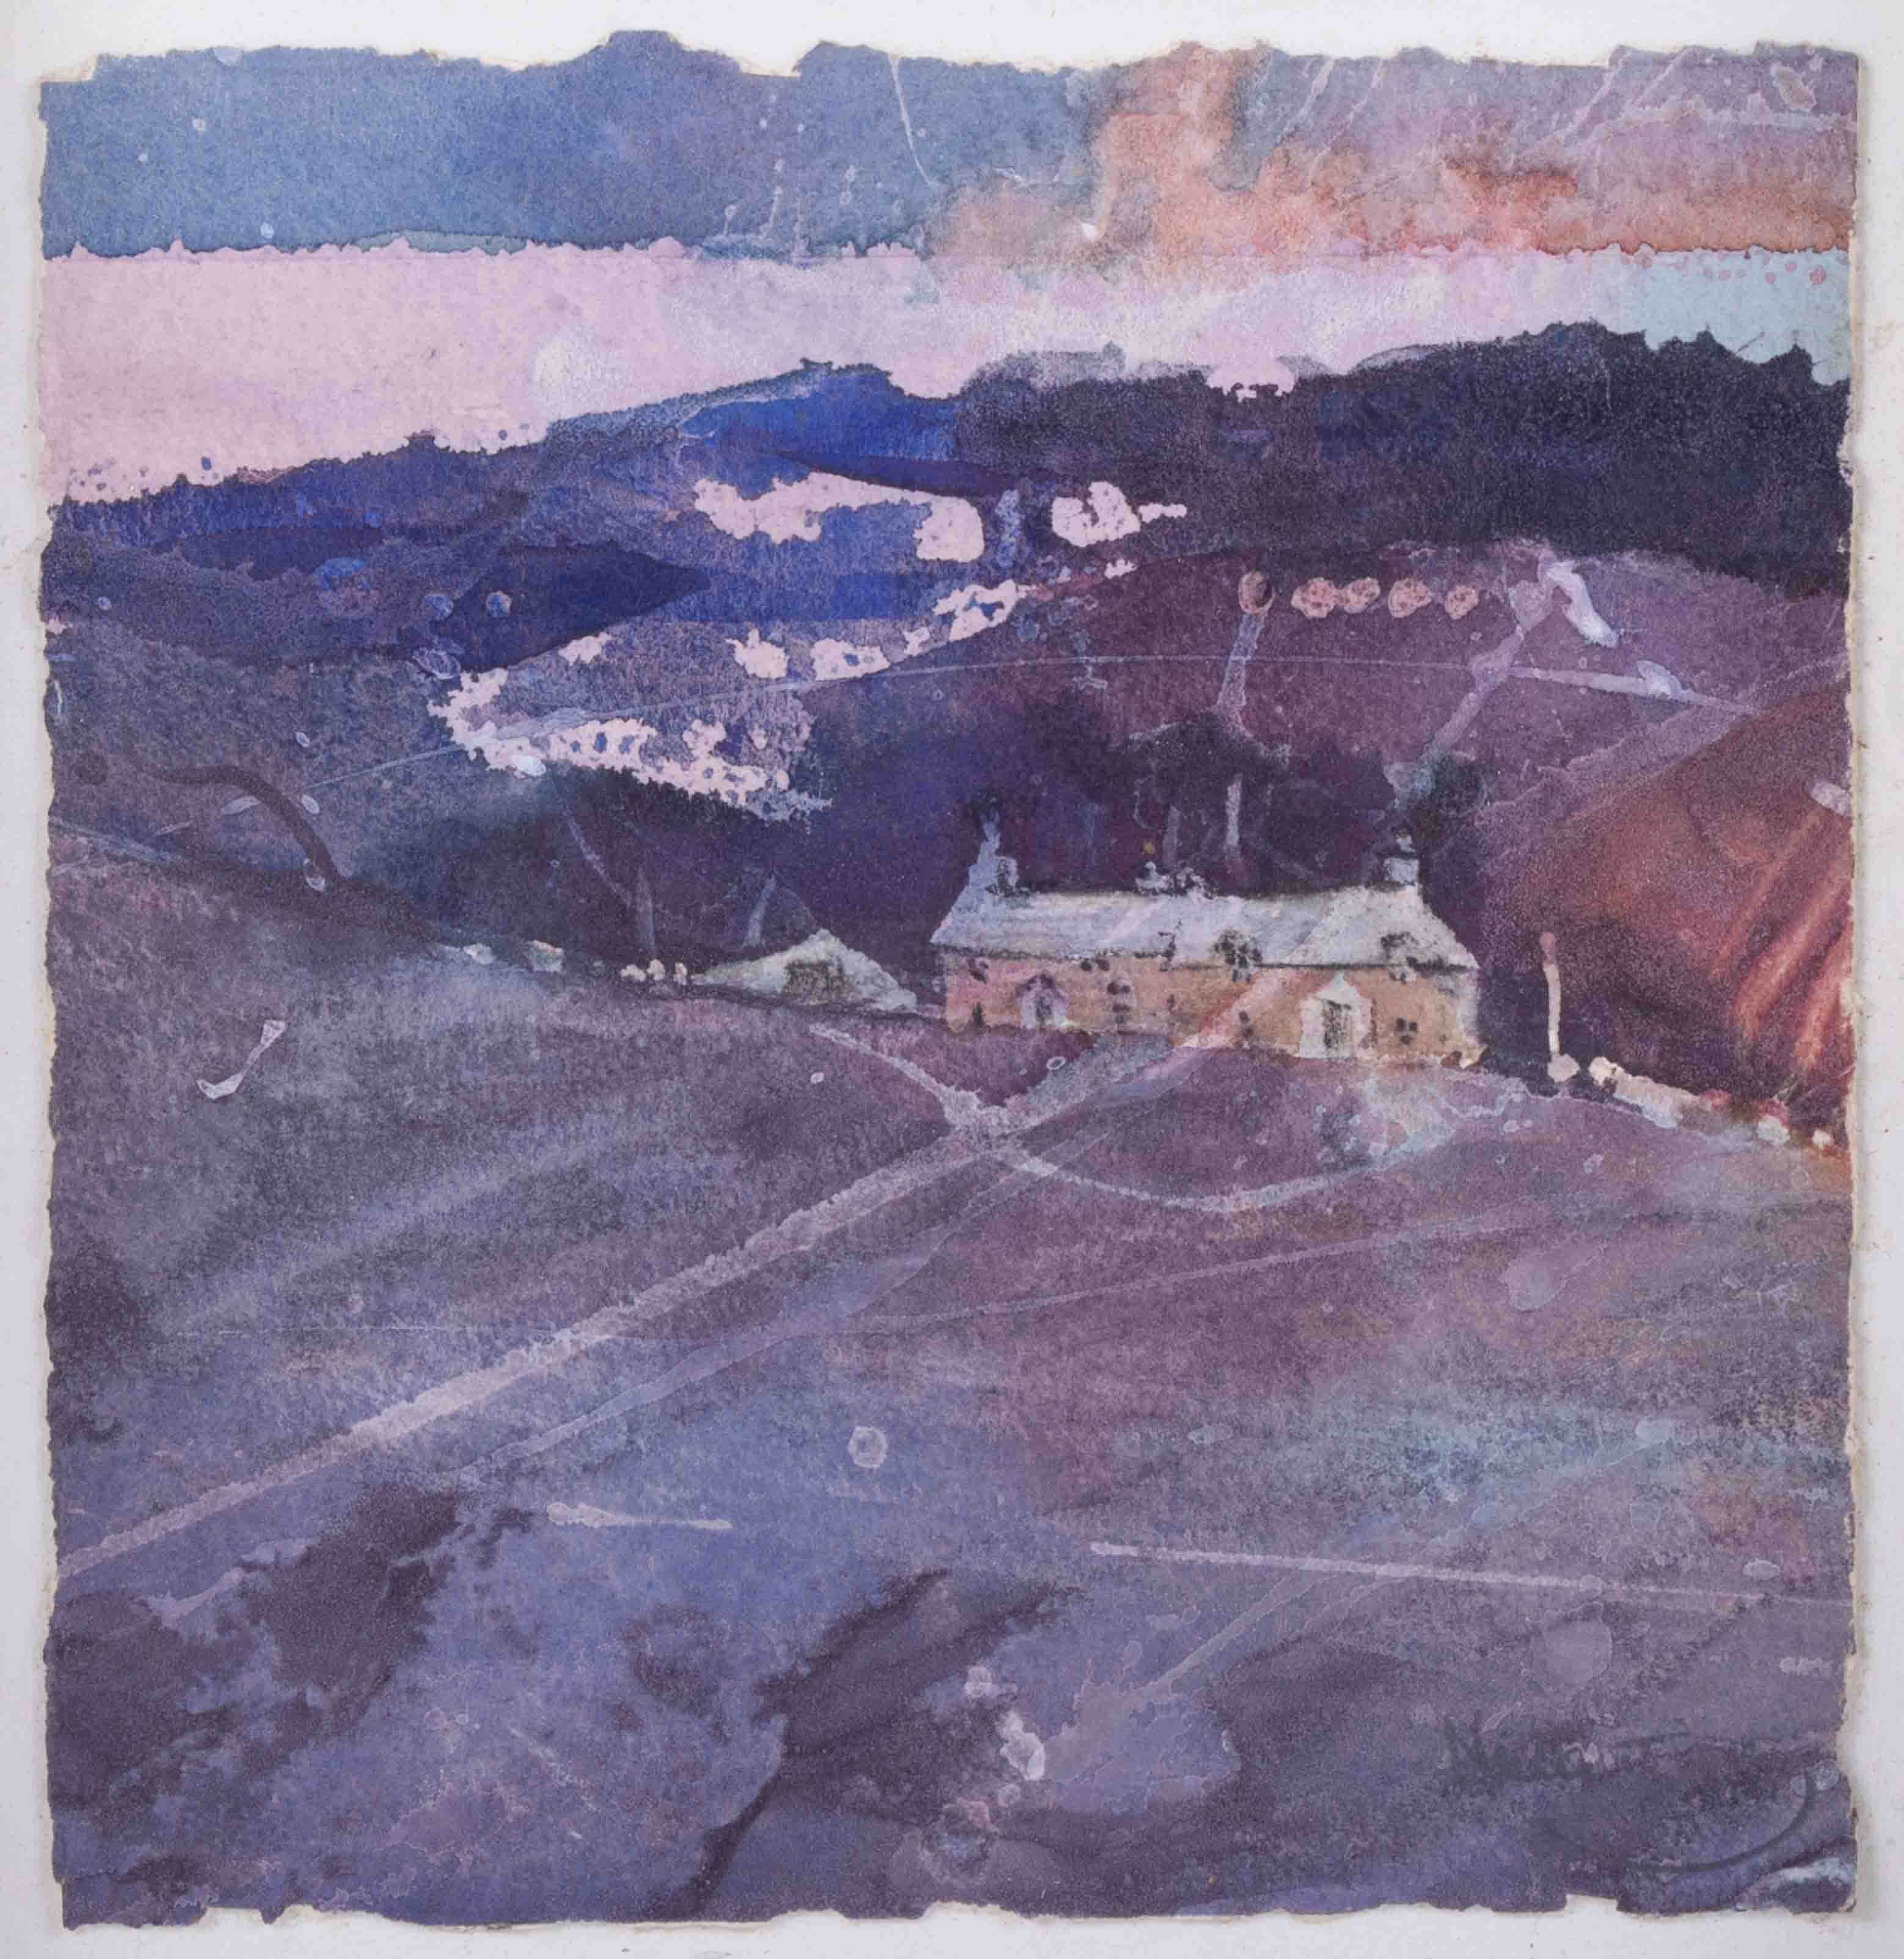 Nicola Tilley, 'Home Farm, 2008' watercolour, 21cm x 21cm, framed. - Image 2 of 2